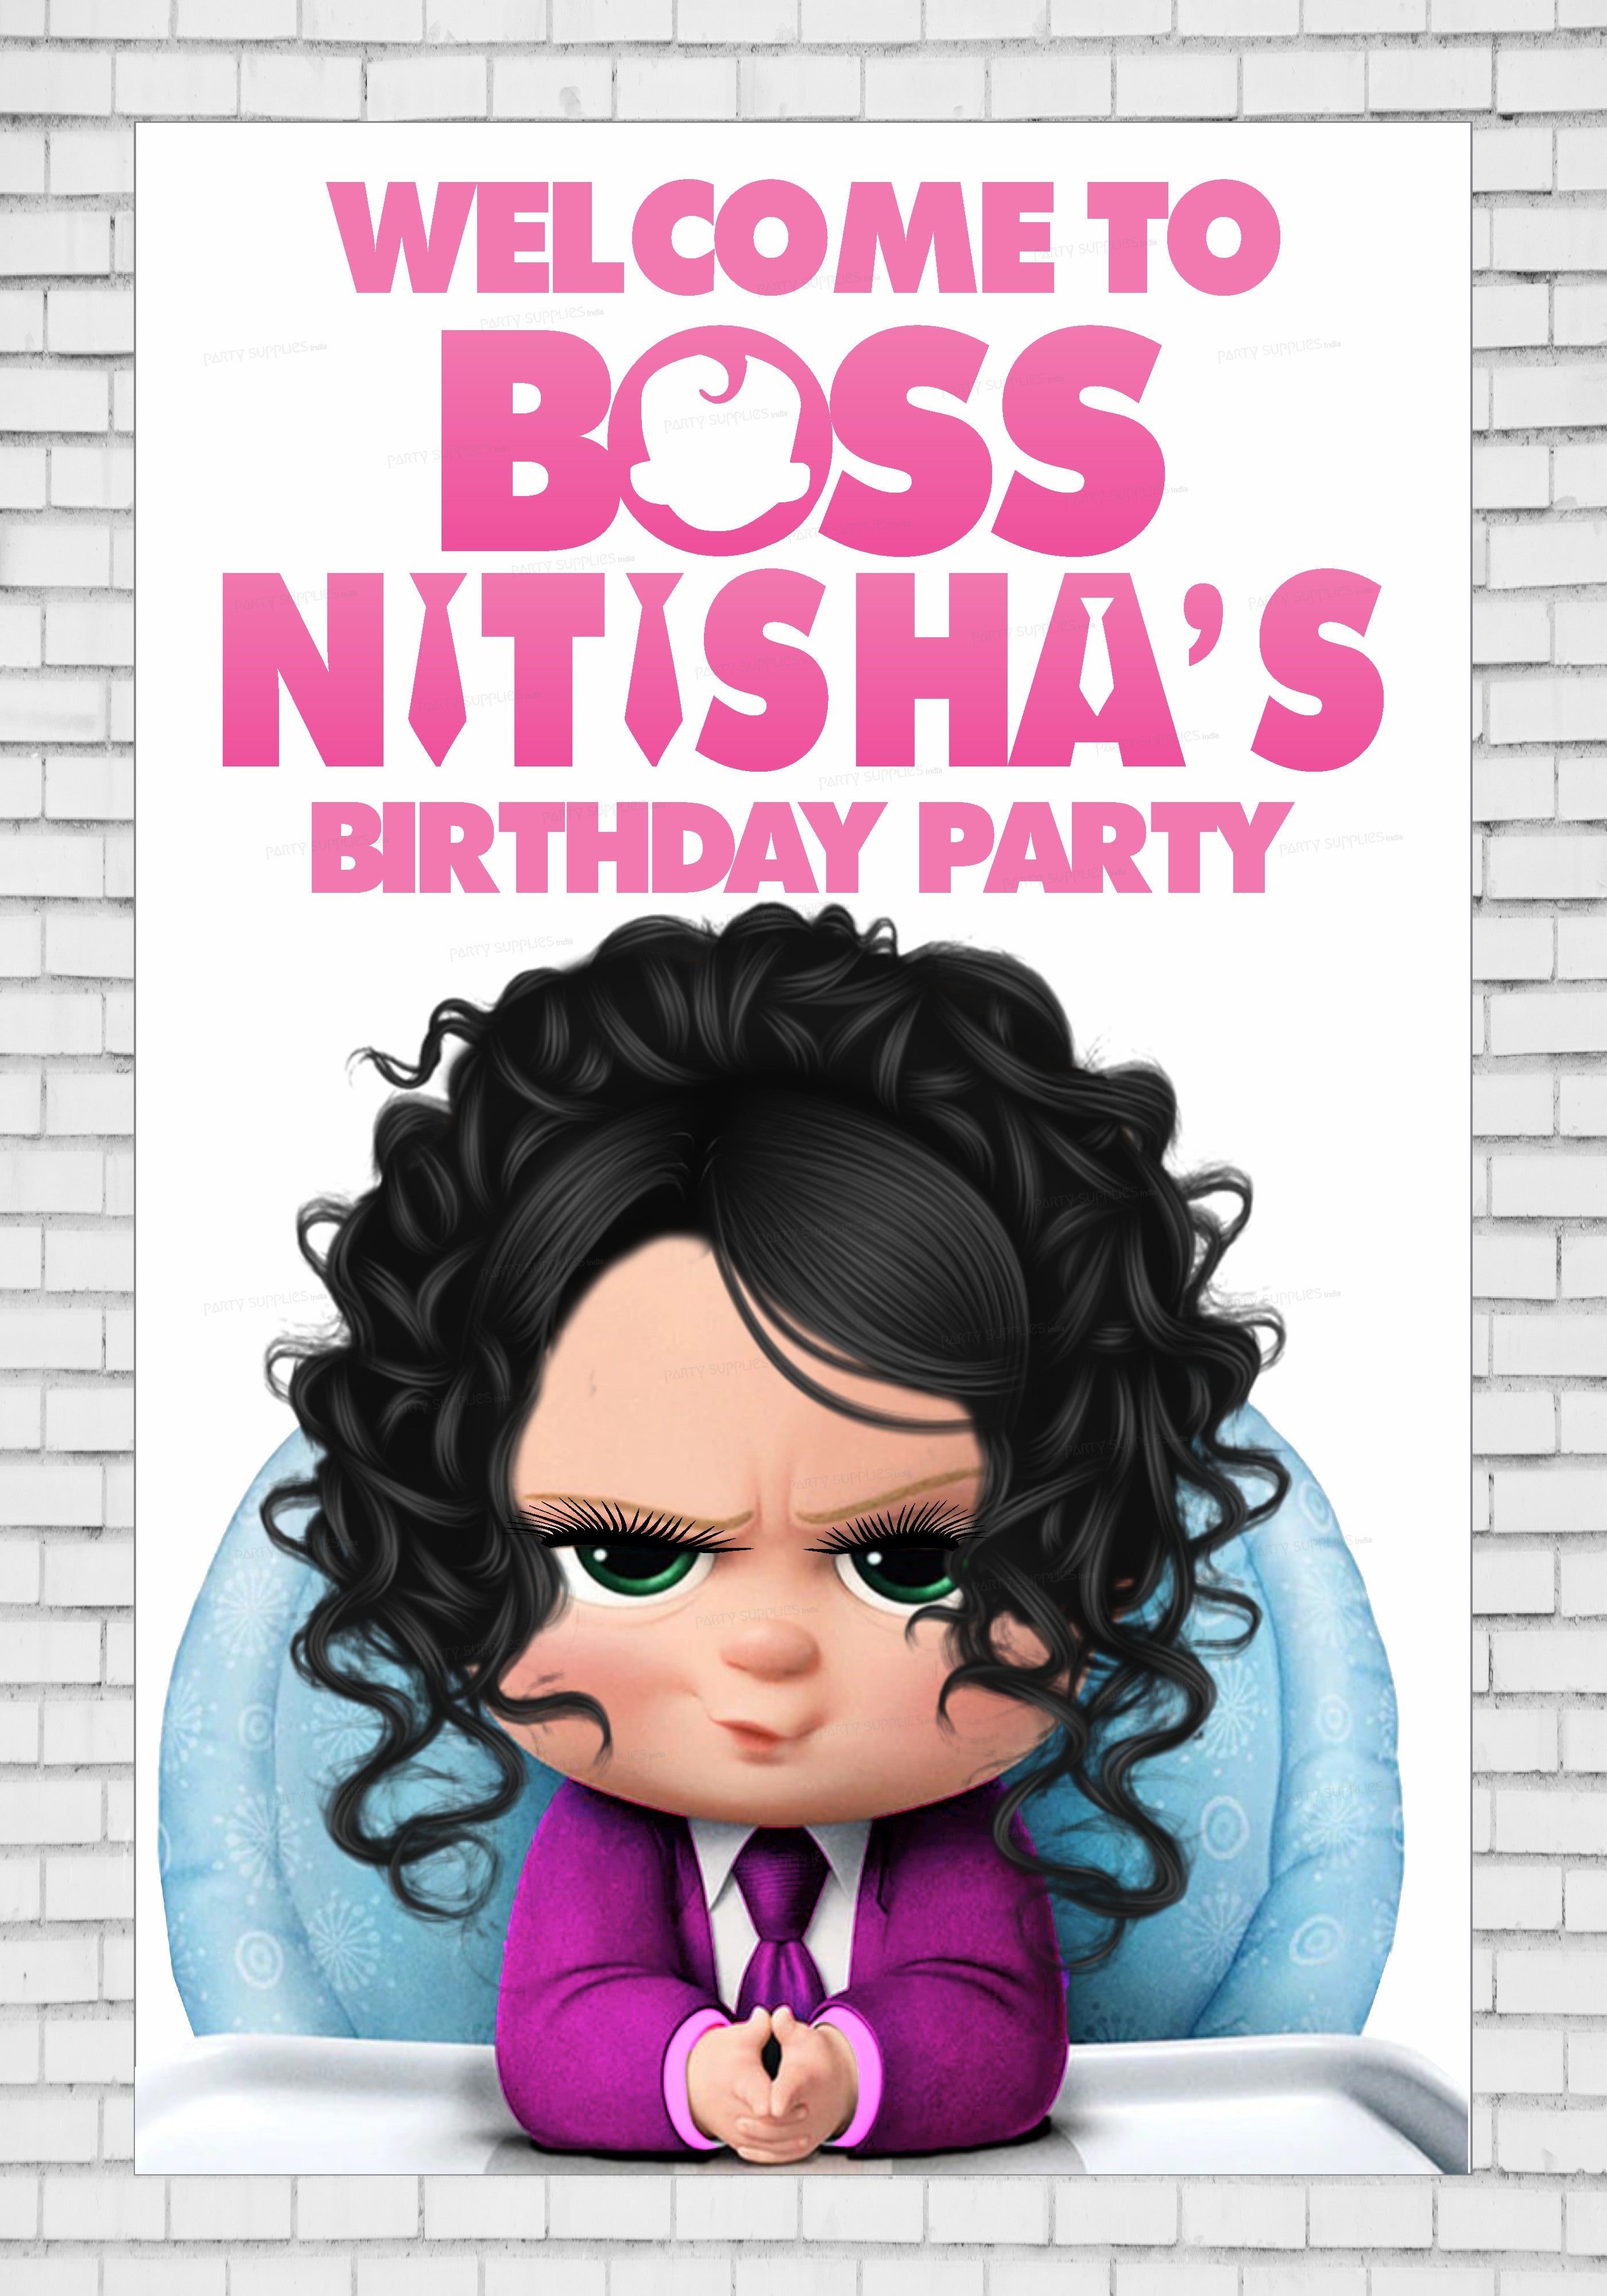 PSI Girl Boss Baby Theme Customized Welcome Board